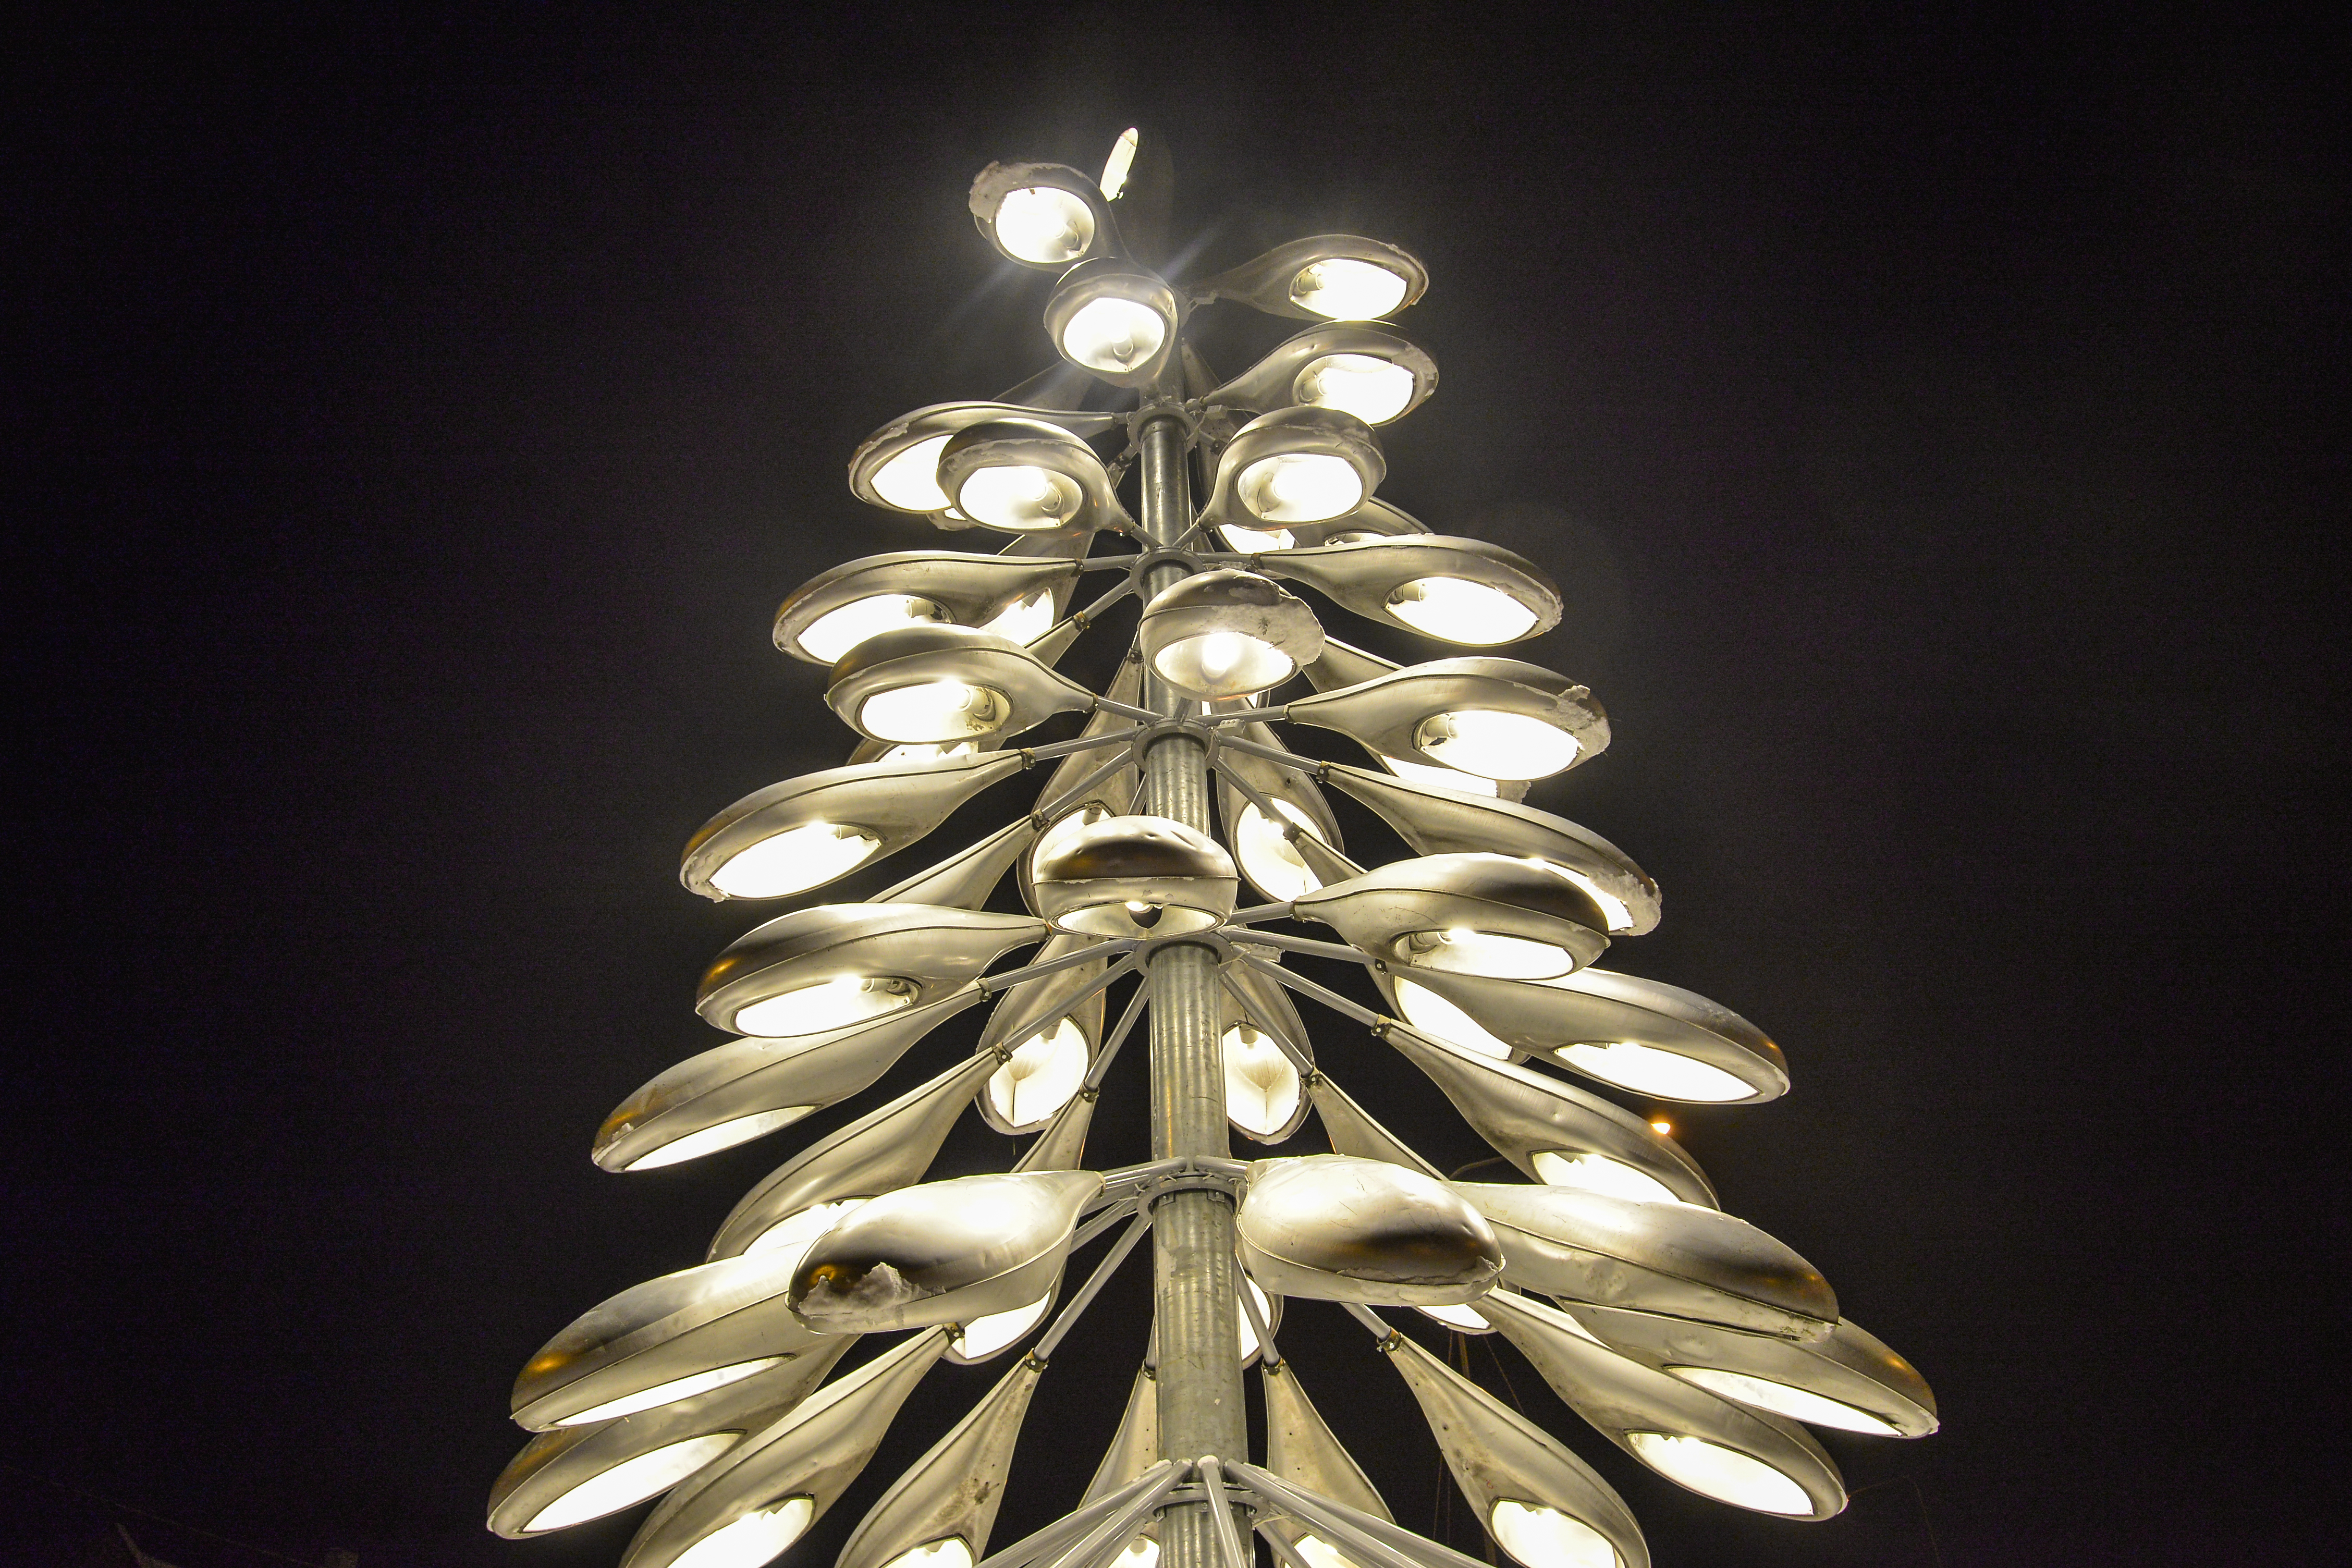 The Viljandi Christmas tree. Photo by Kenno Soo.